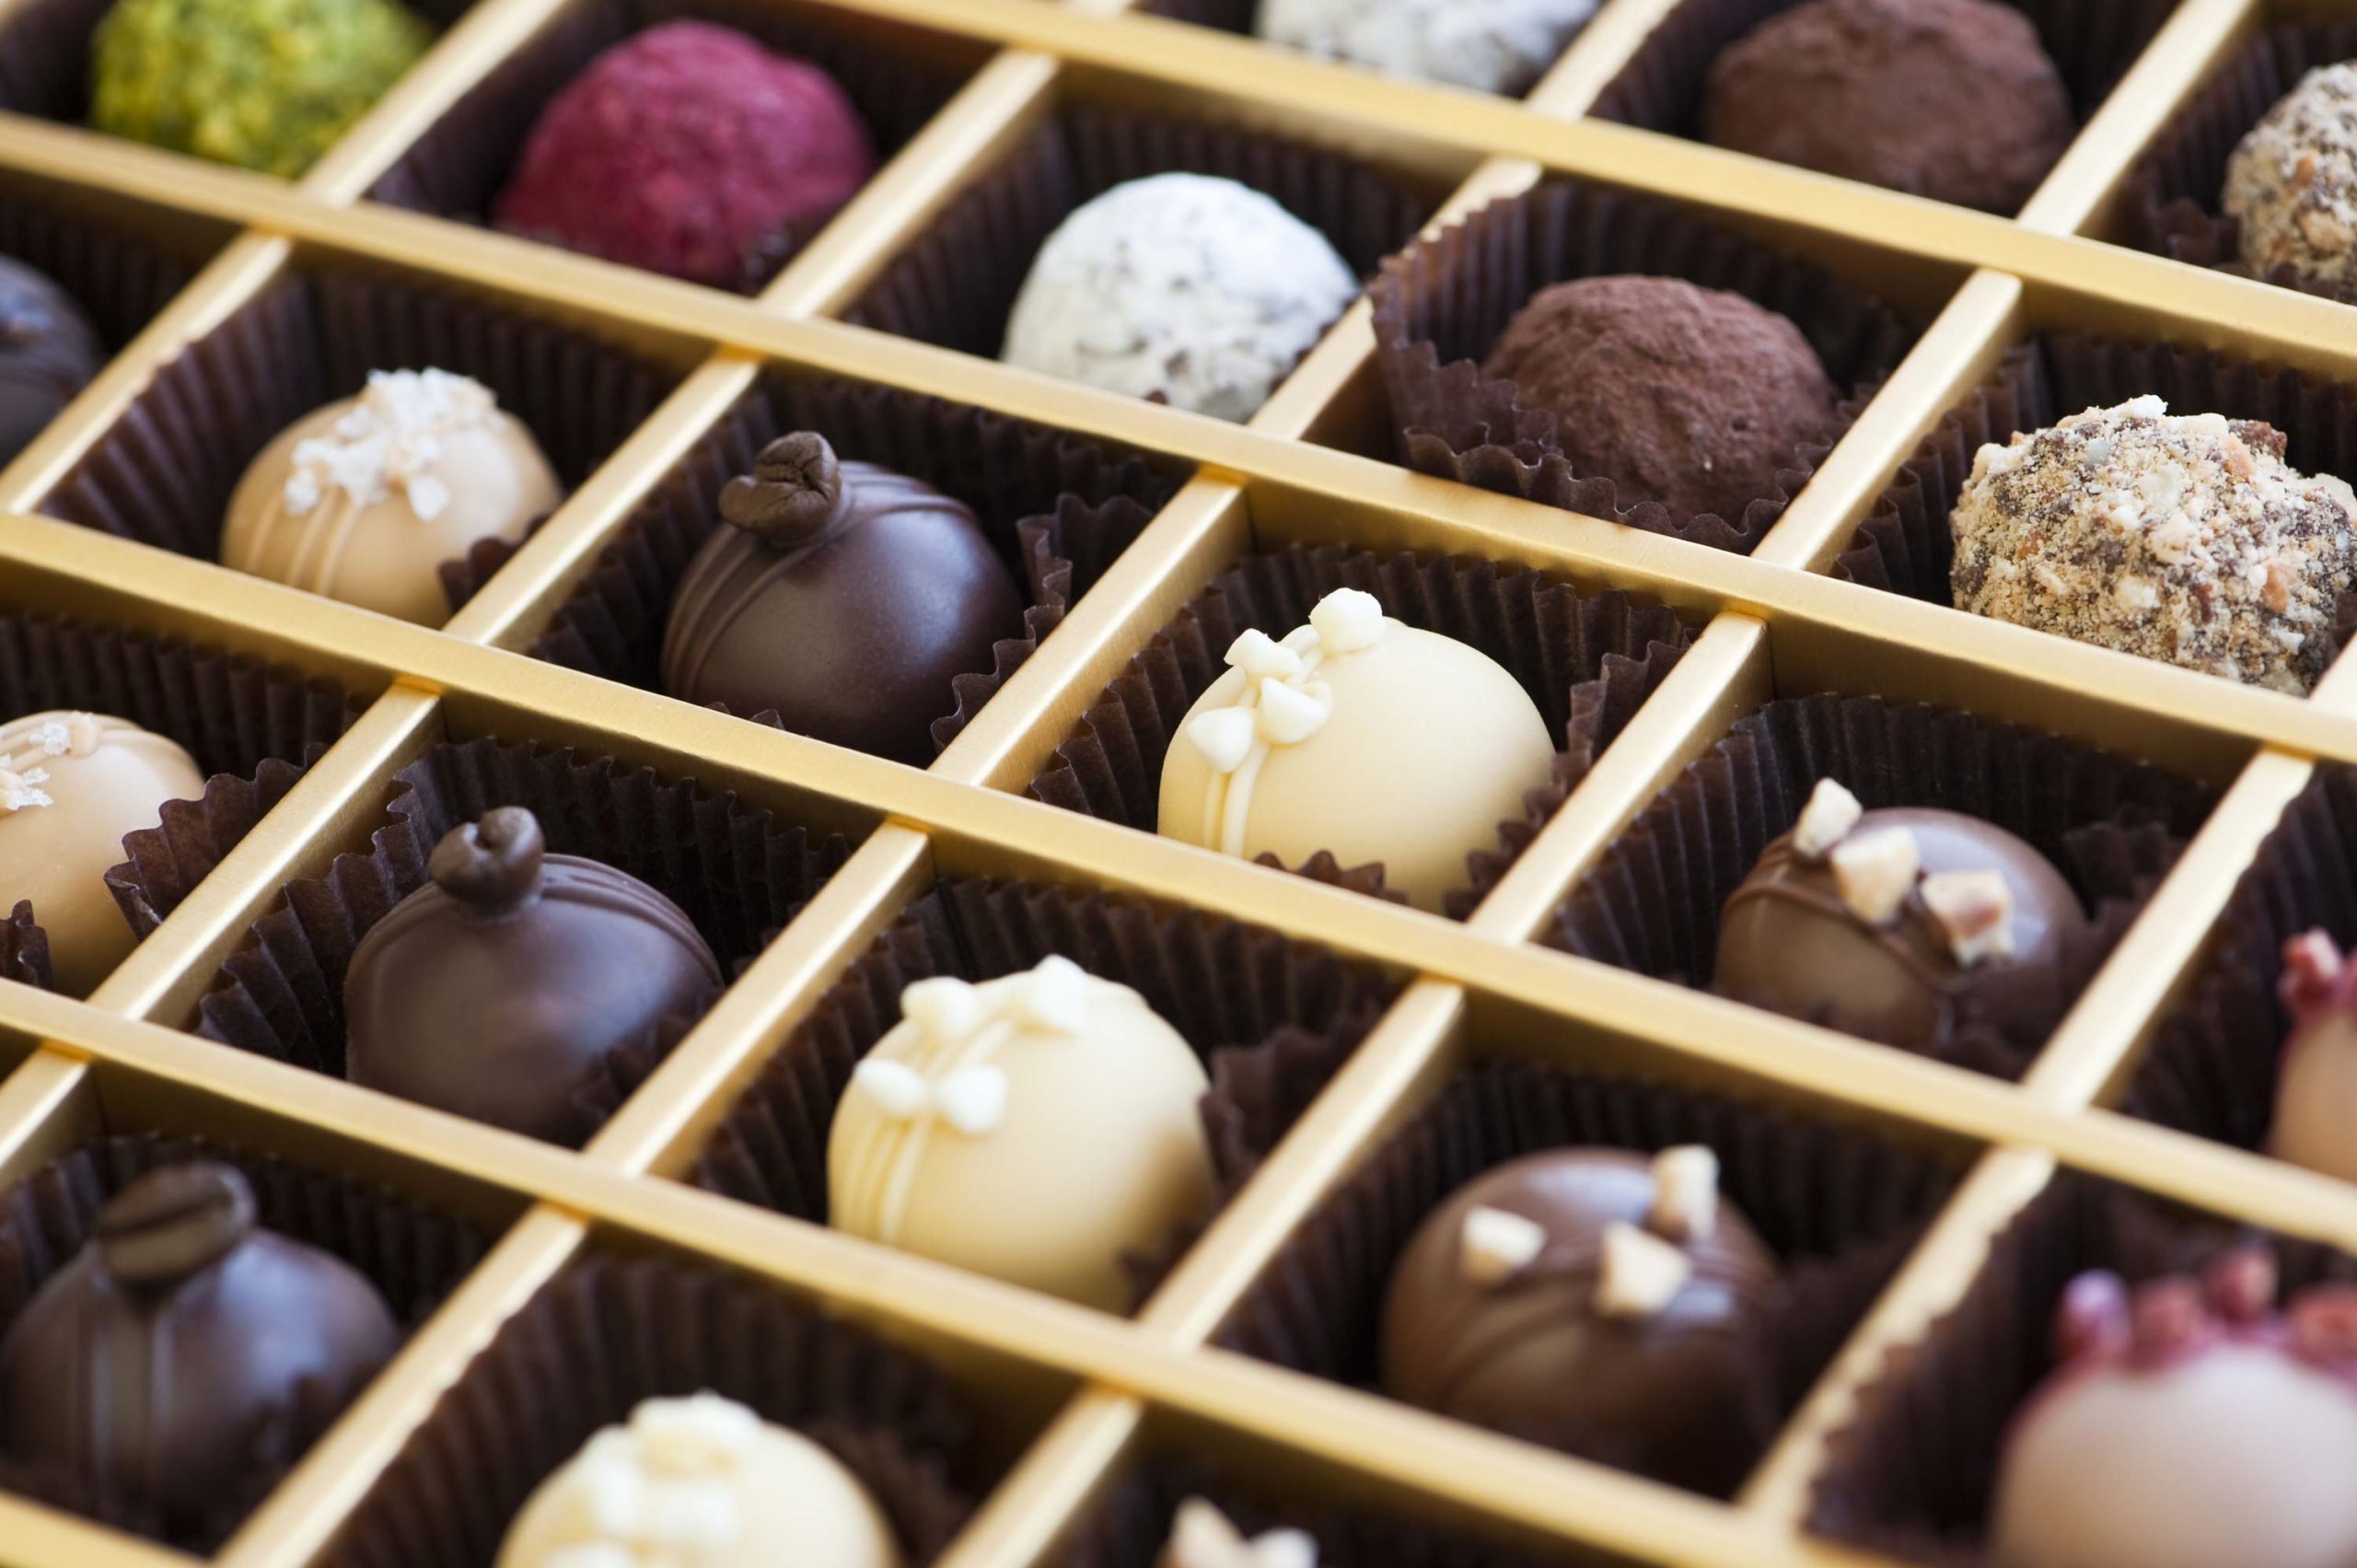 Artisanal chocolates in a box